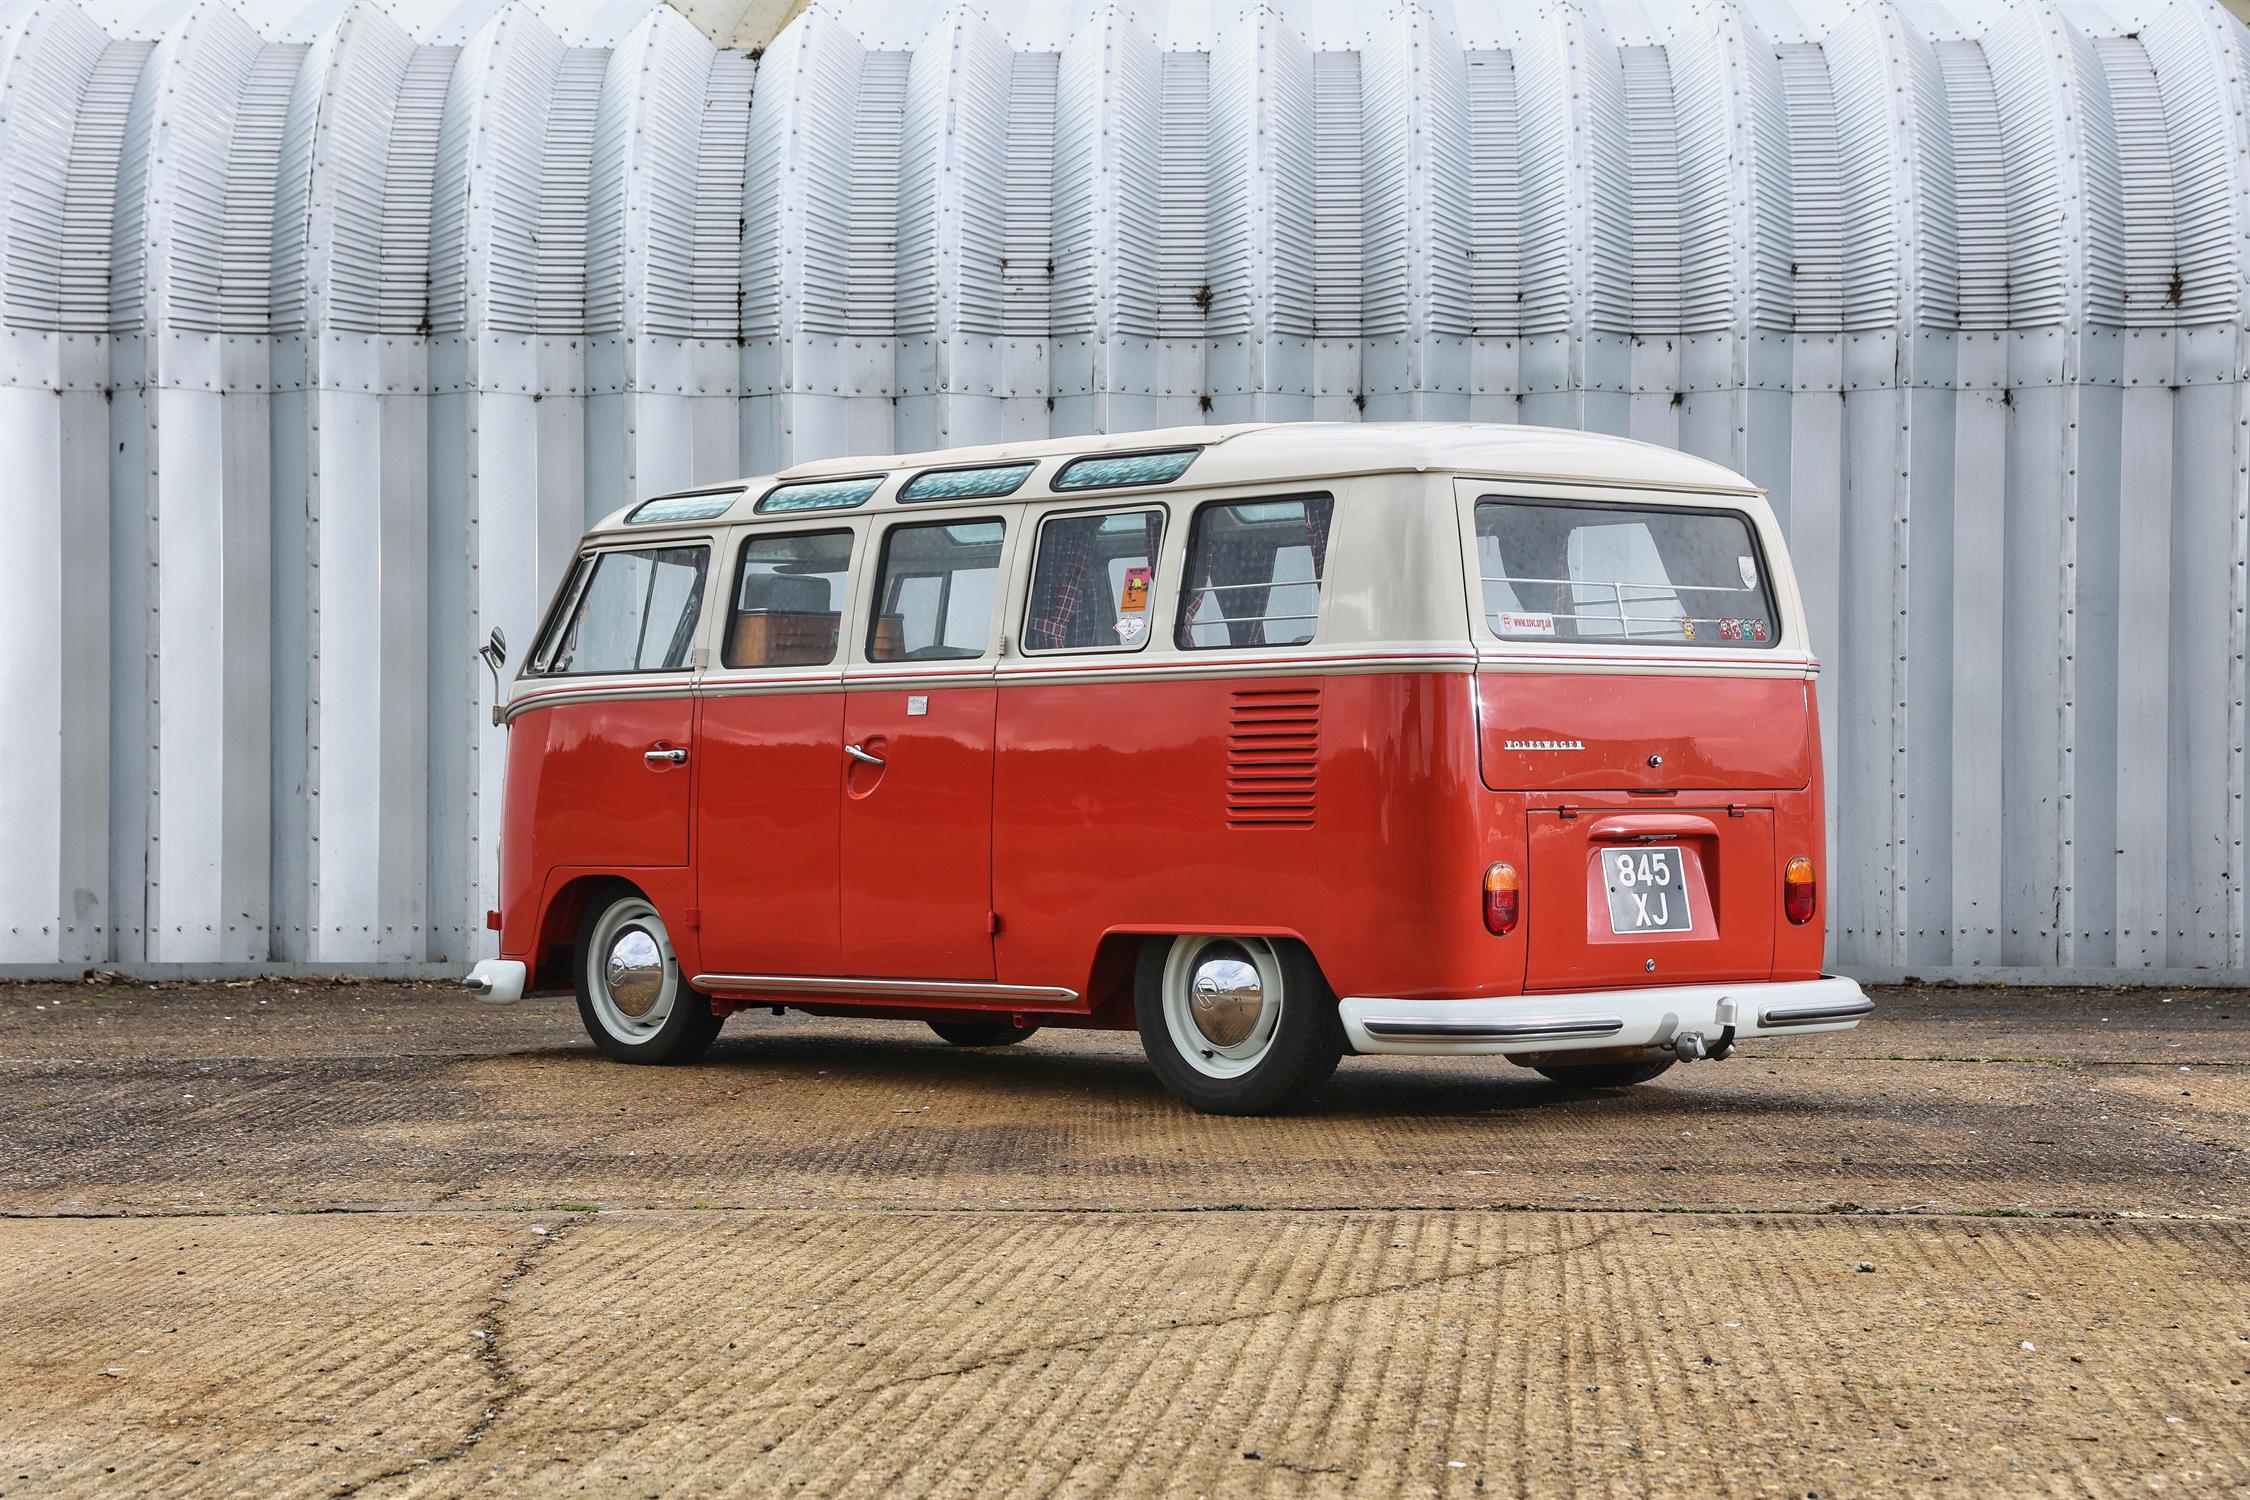 **Regretfully Withdrawn** 1964 Volkswagen Type 2 (T1) Microbus Deluxe 21-window 'Samba' - RHD - Image 4 of 10